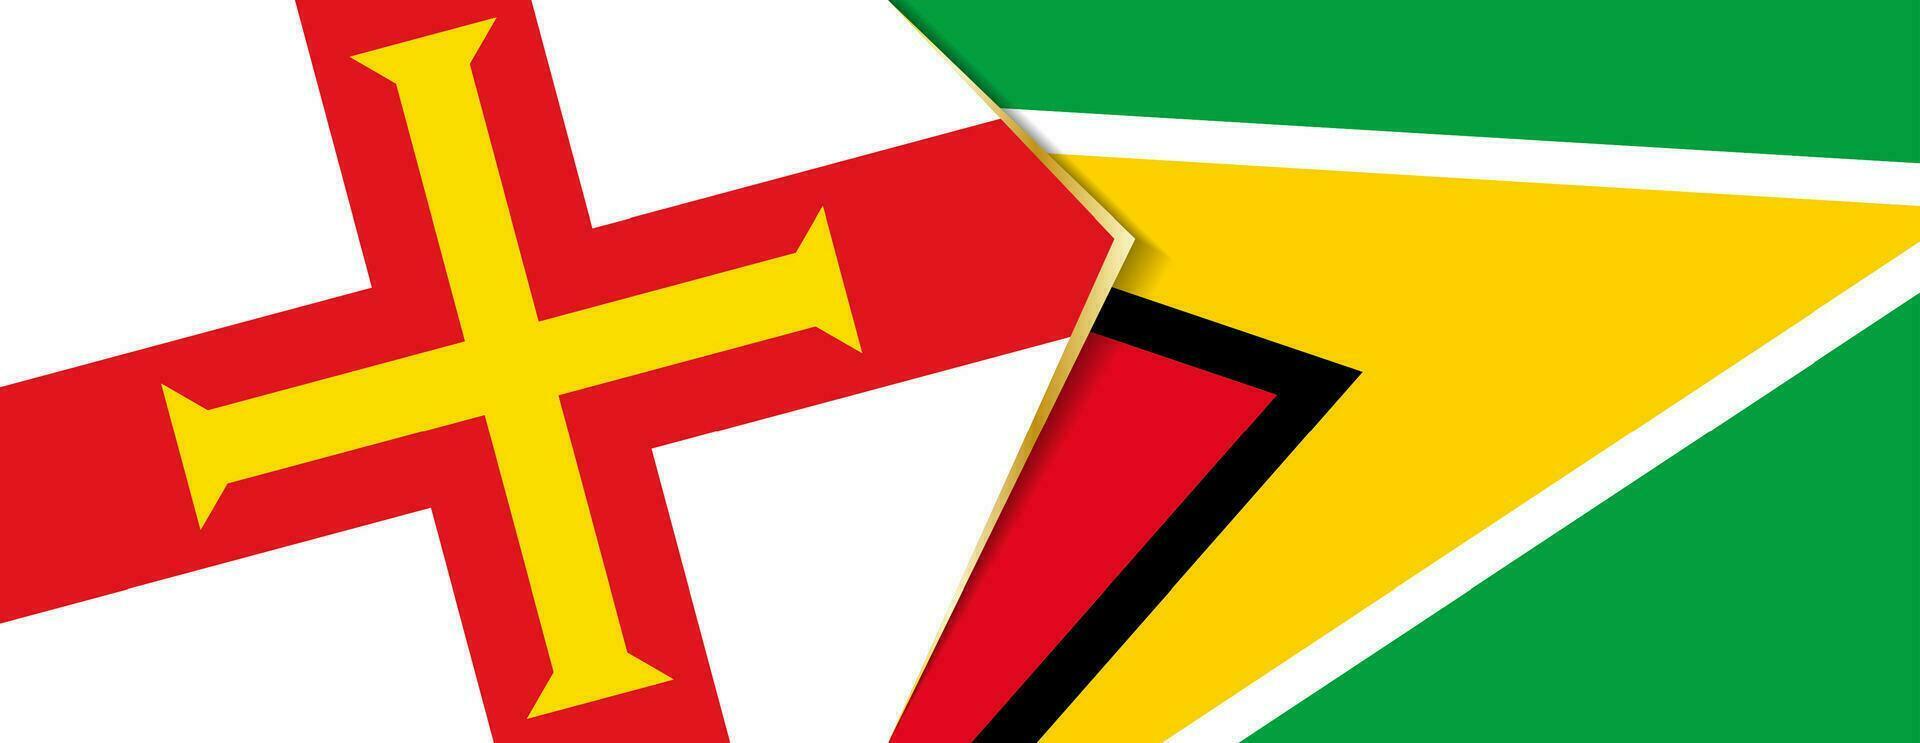 Guernsey en Guyana vlaggen, twee vector vlaggen.